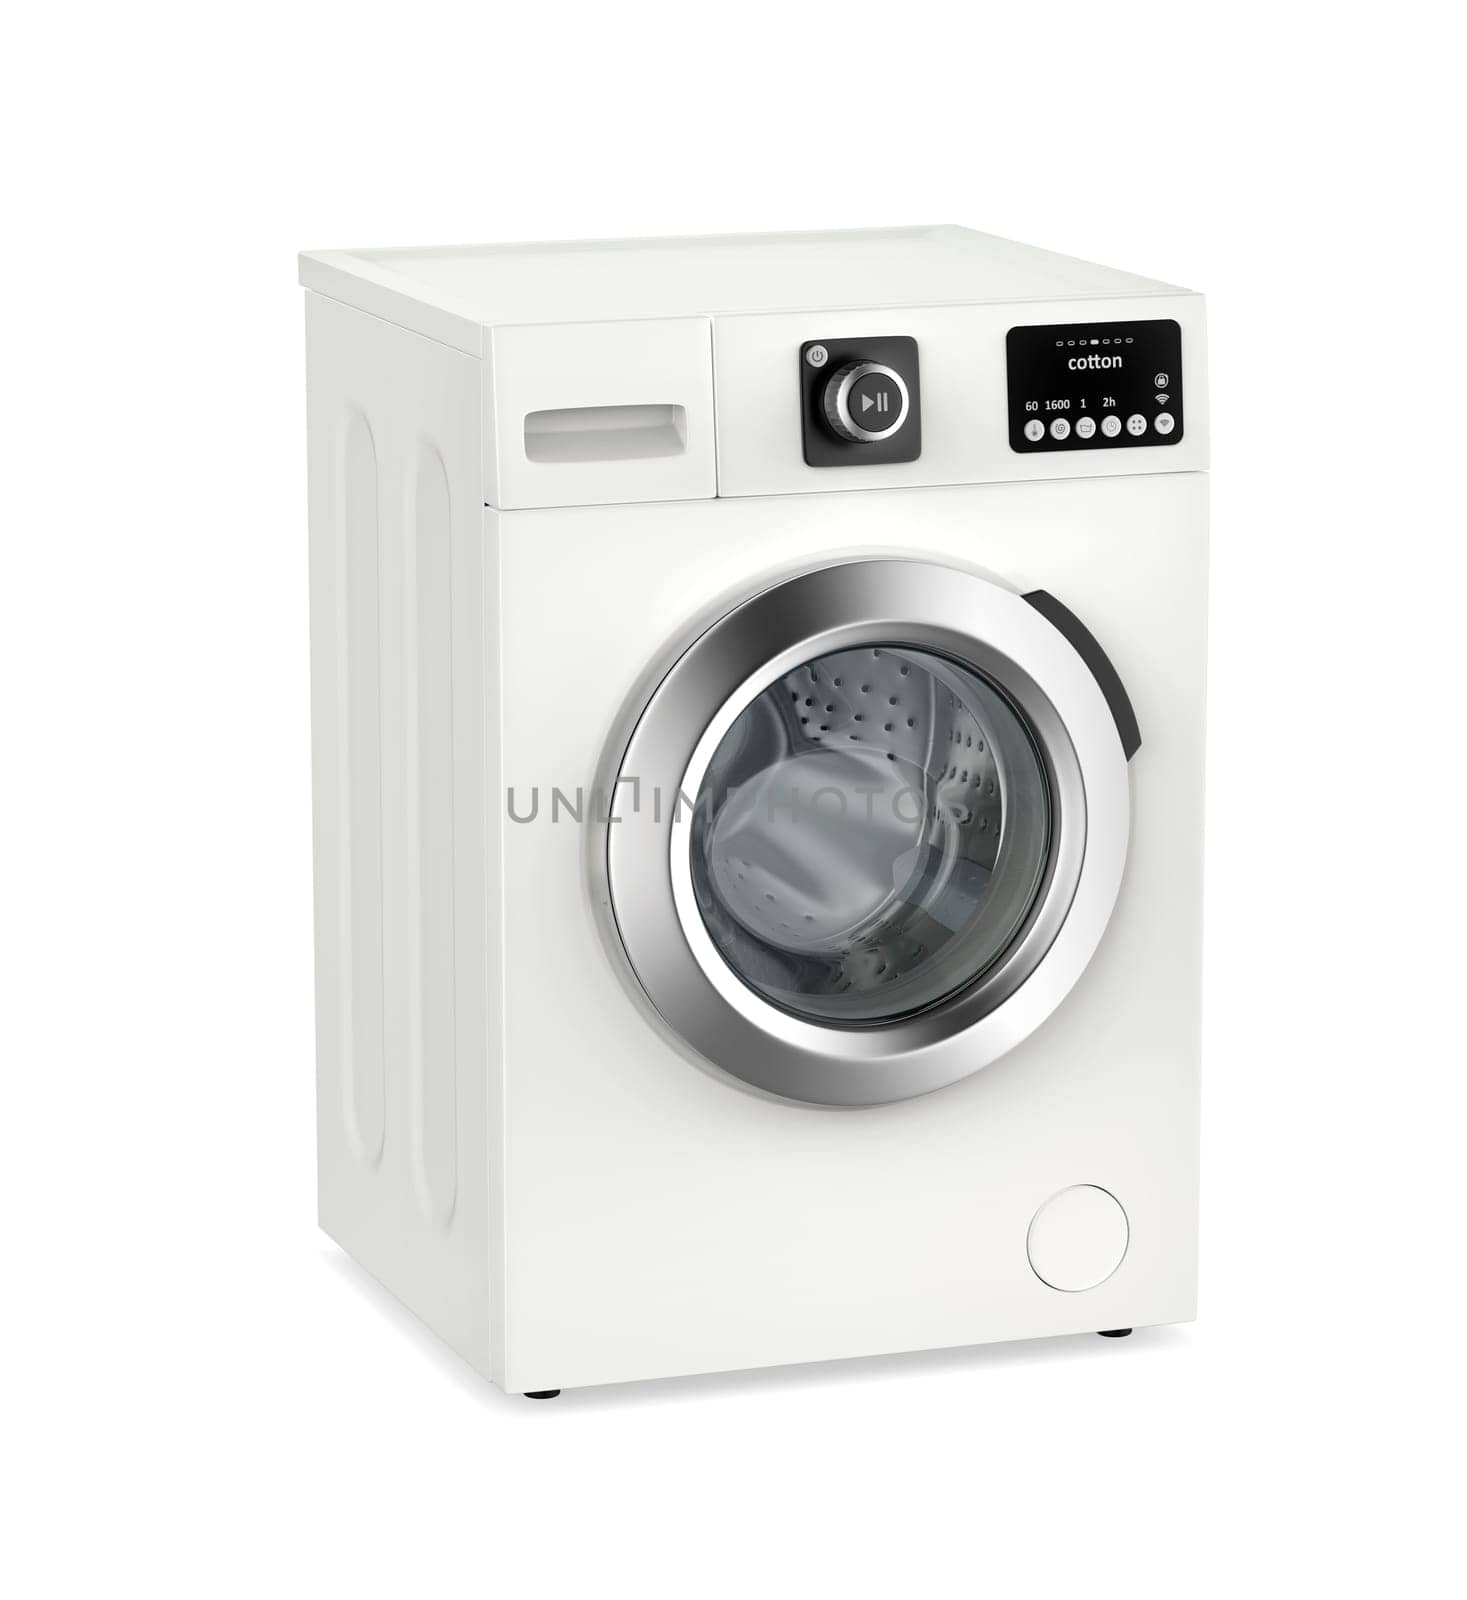 Digital washing machine on white background